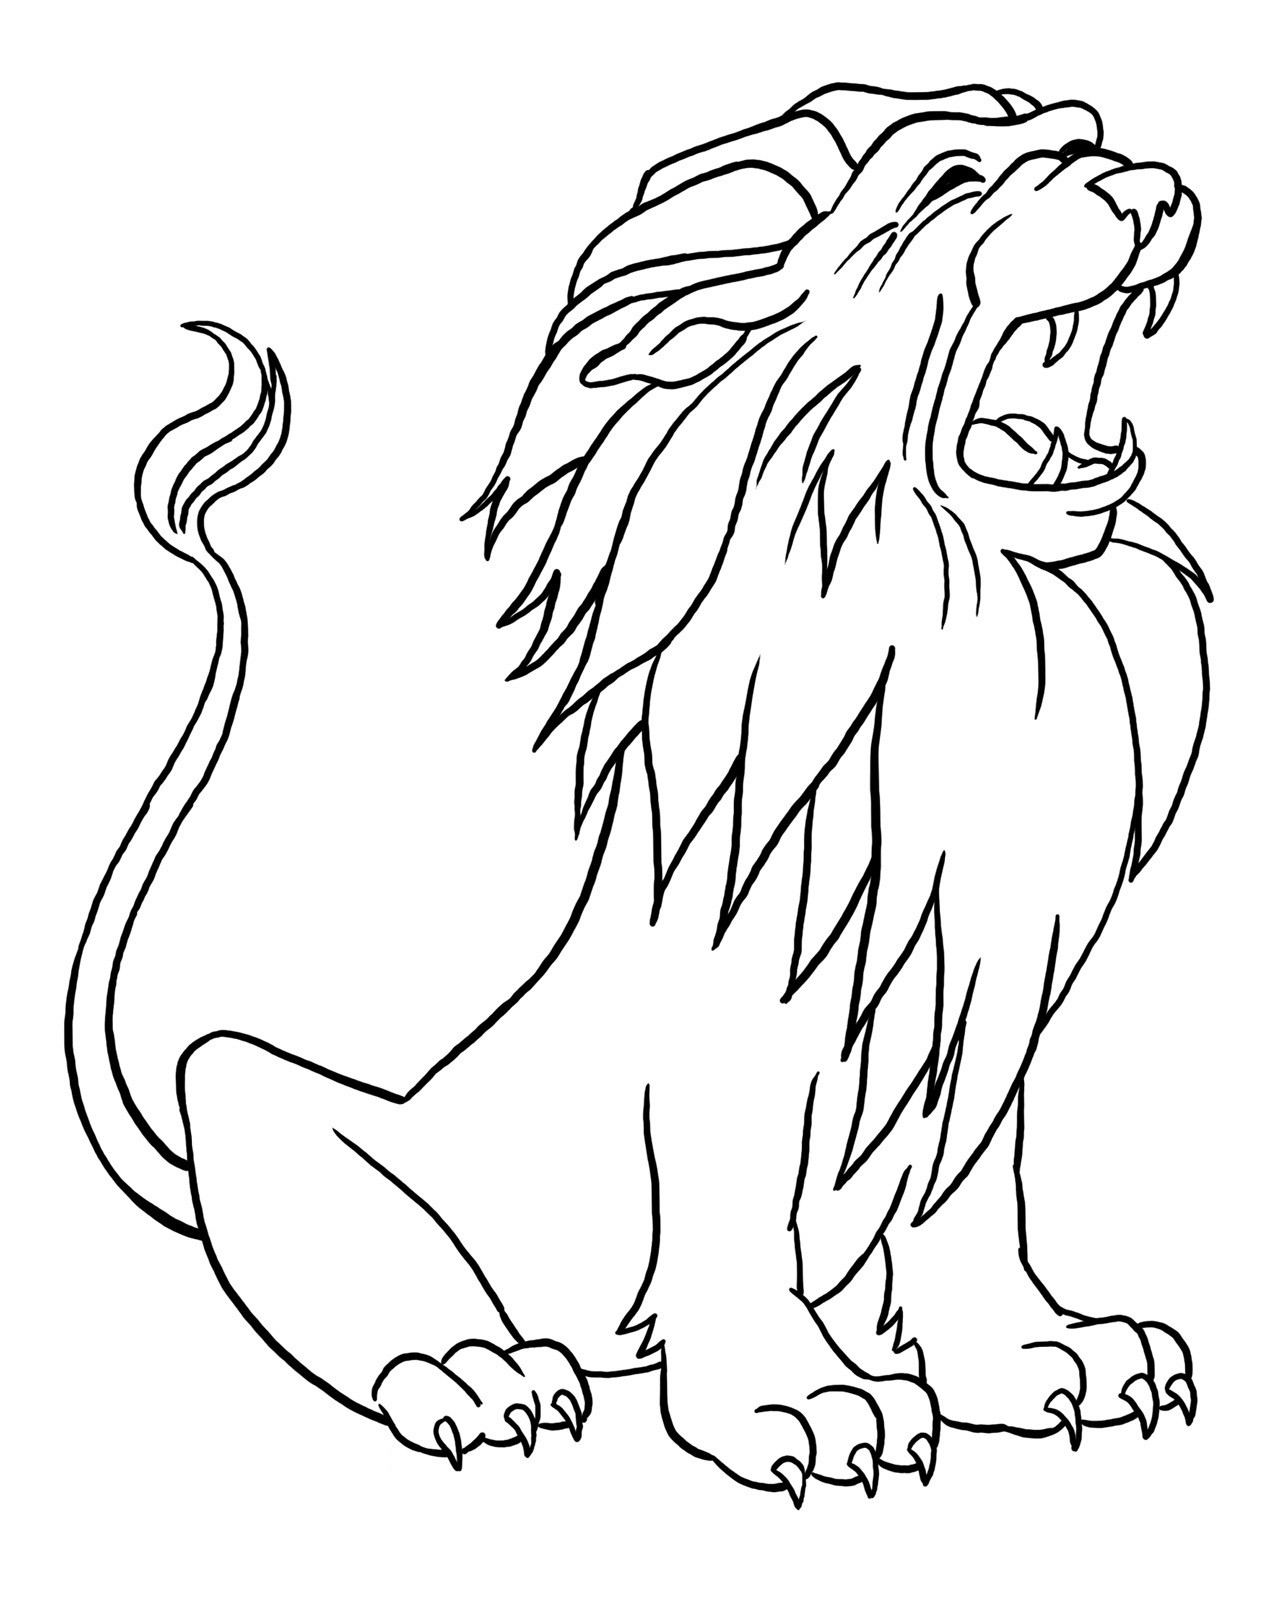 contoh gambar sketsa singa hd